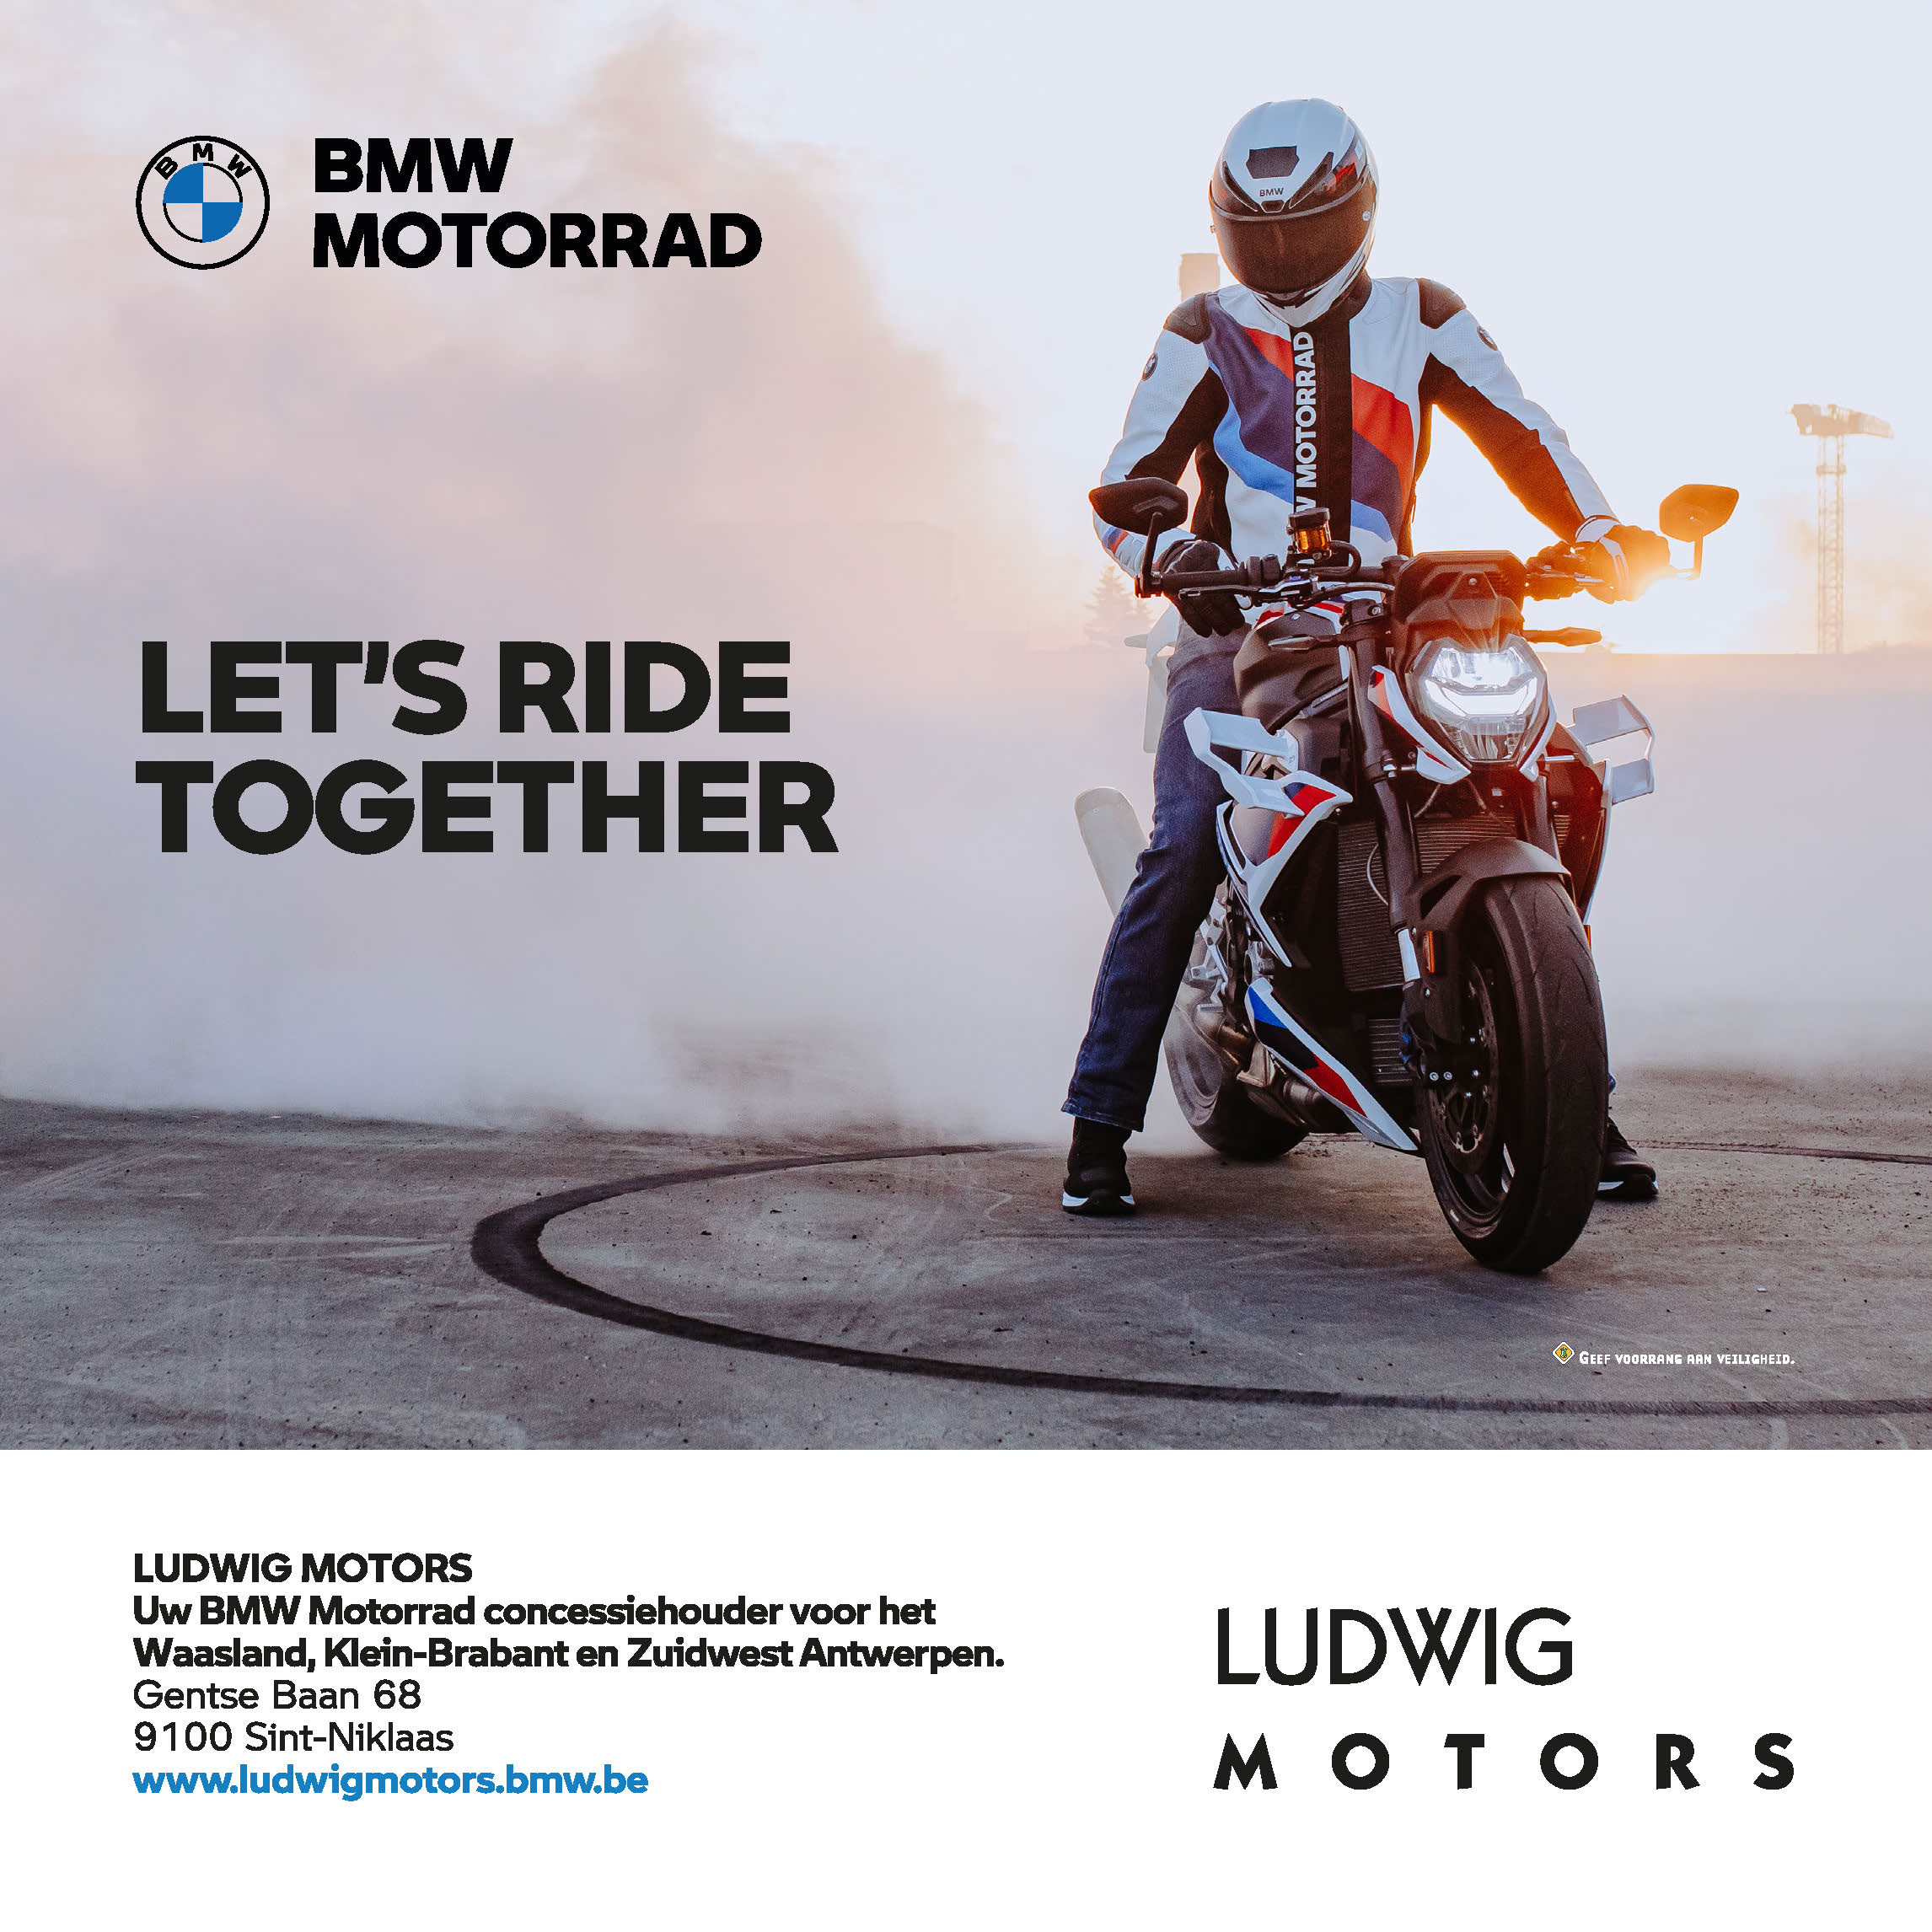 BMWMotorrad_LudwigMotors_Motokicx adv